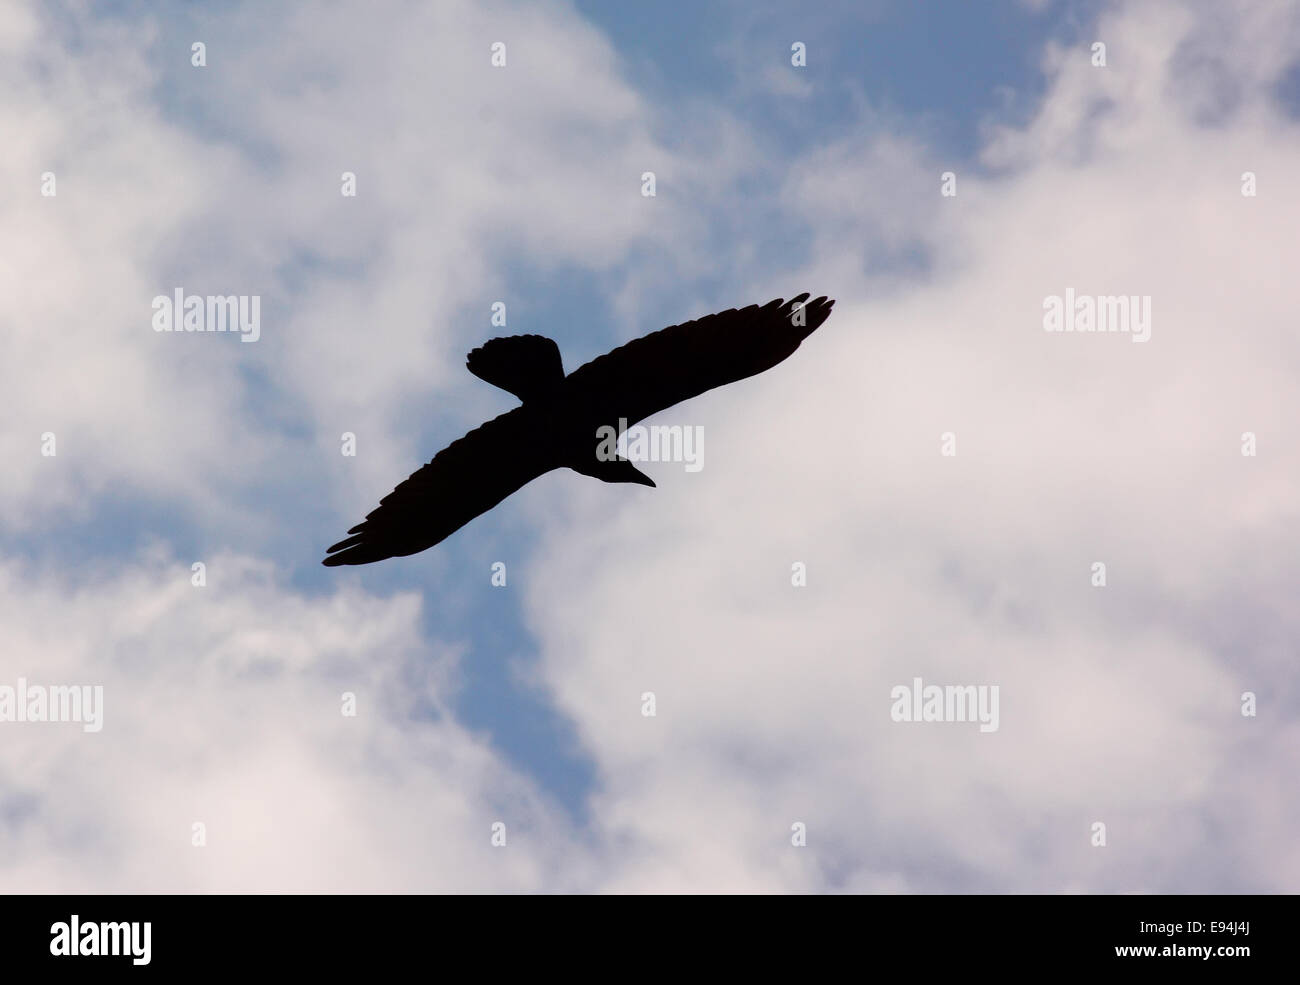 Raven flying, silhouette Stock Photo